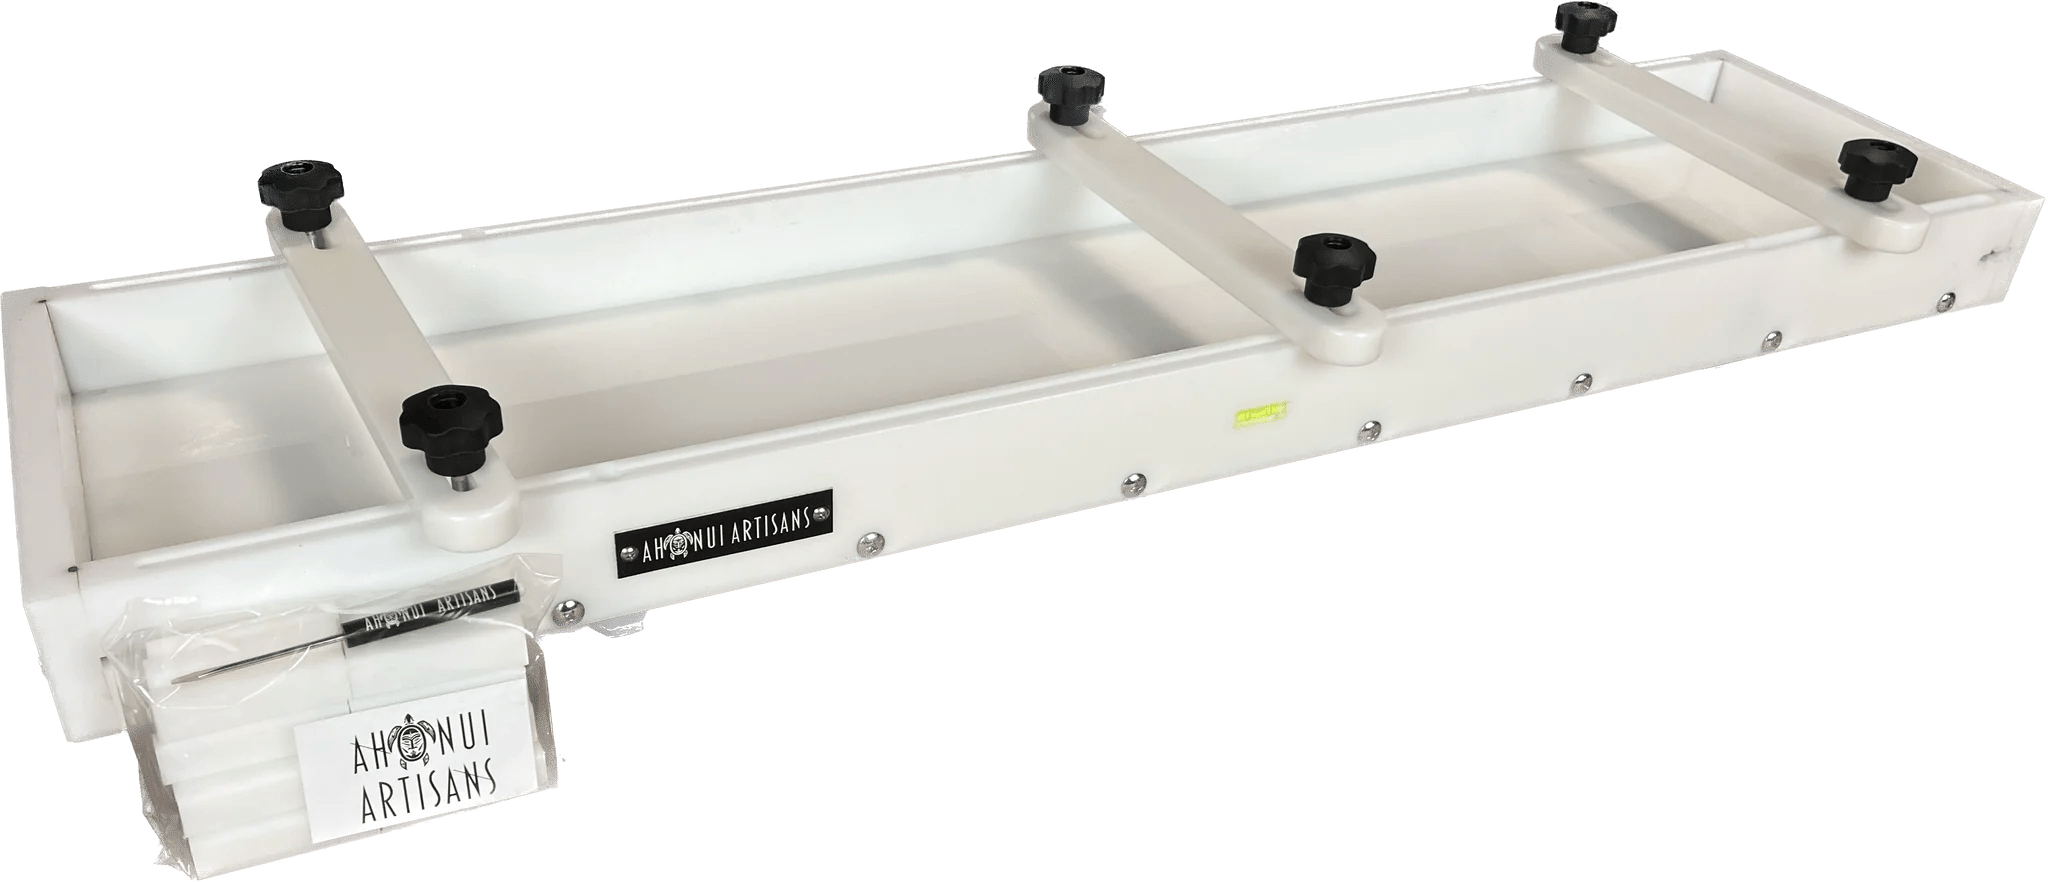 Ahonui Artisans HDPE Reusable Epoxy Resin Form 42” x 9” x 2" - Bath Caddy / Long Board mold | HDPE Mold | Hamilton Lee Supply